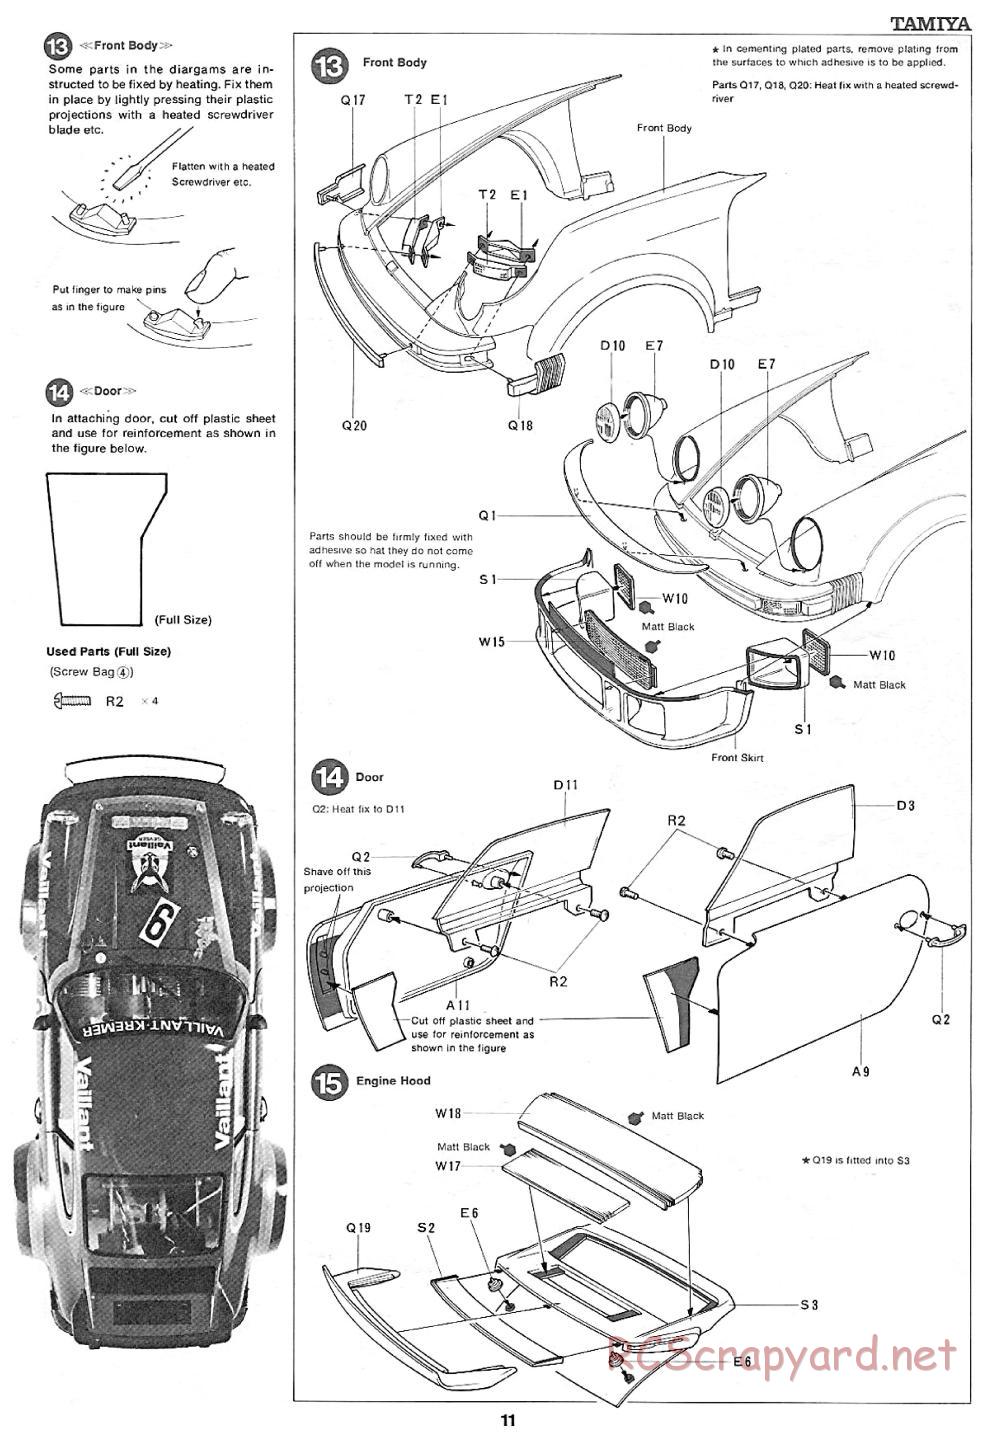 Tamiya - Porsche 934 Turbo RSR - 58001 - Manual - Page 11